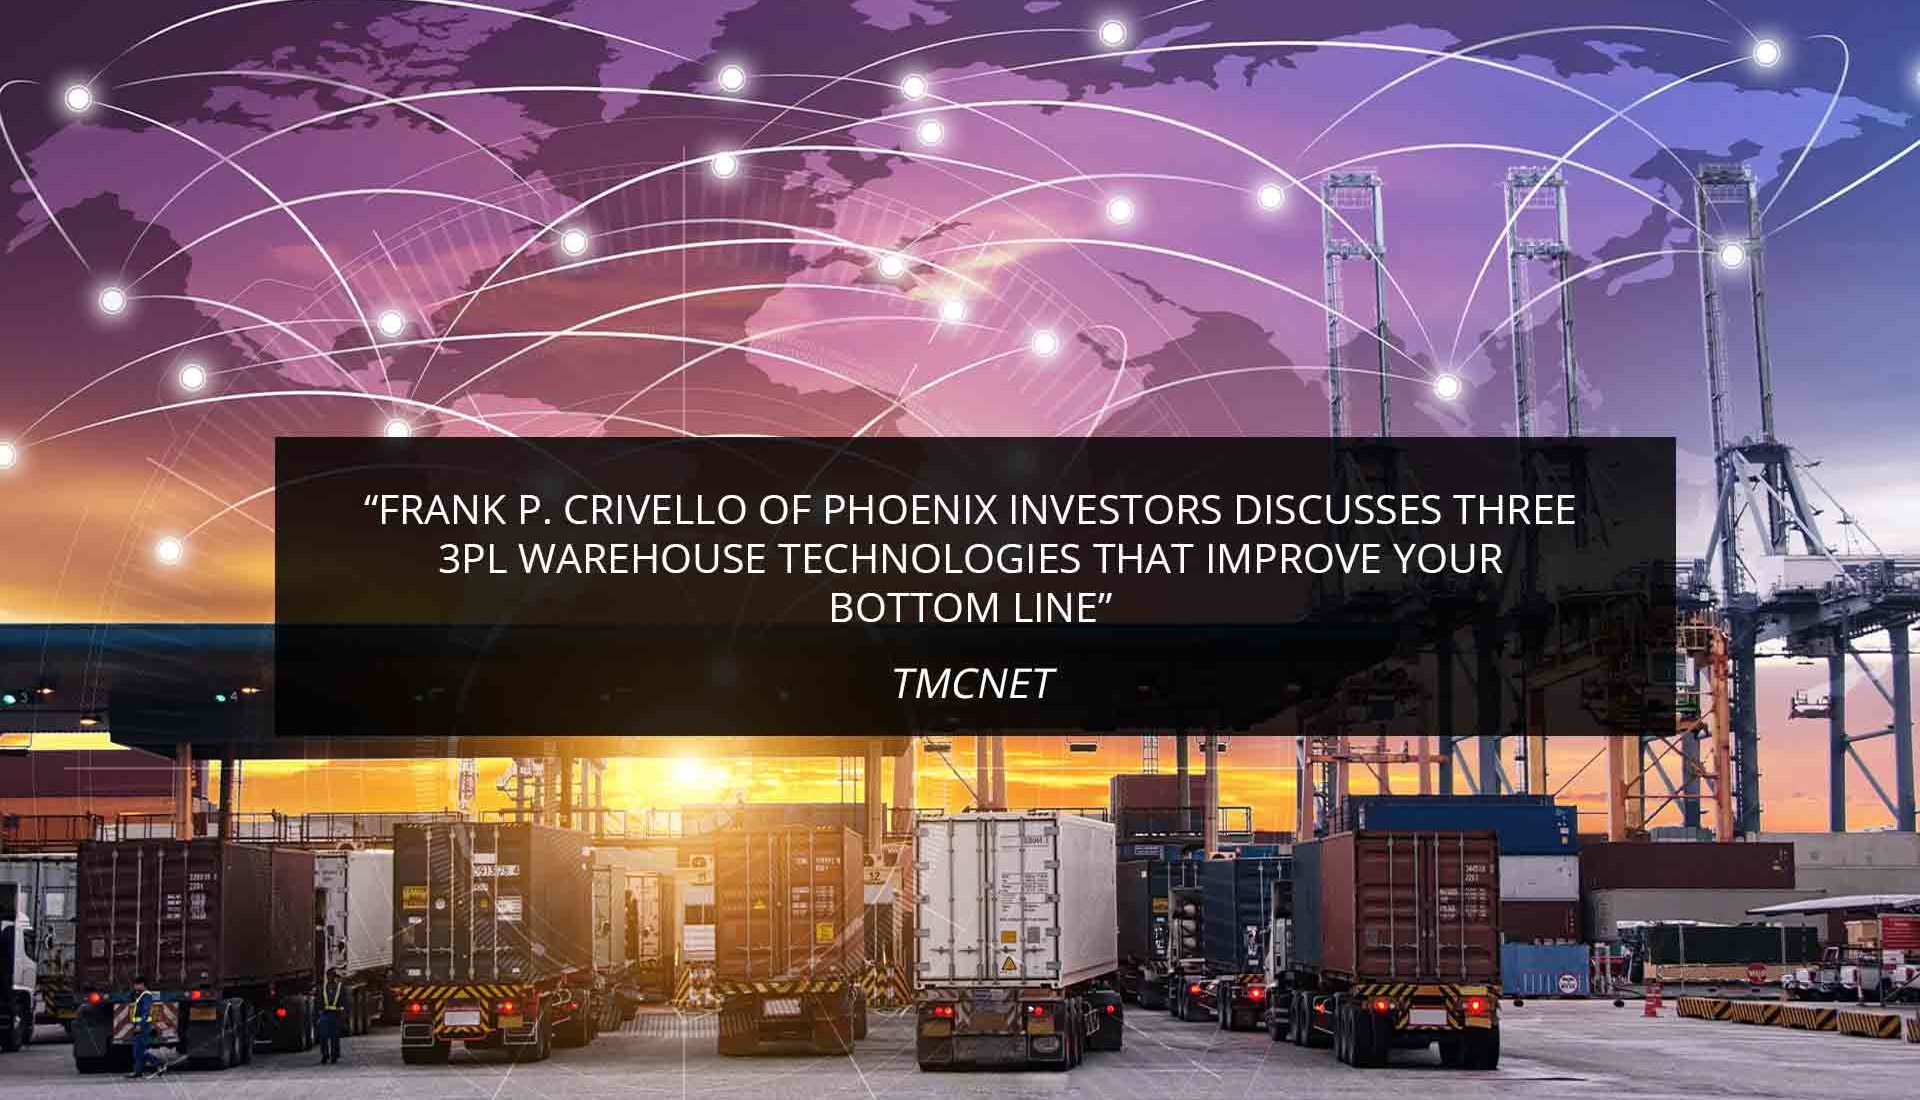 Frank P. Crivello of Phoenix Investors Discusses Three 3PL Warehouse Technologies That Improve Your Bottom Line